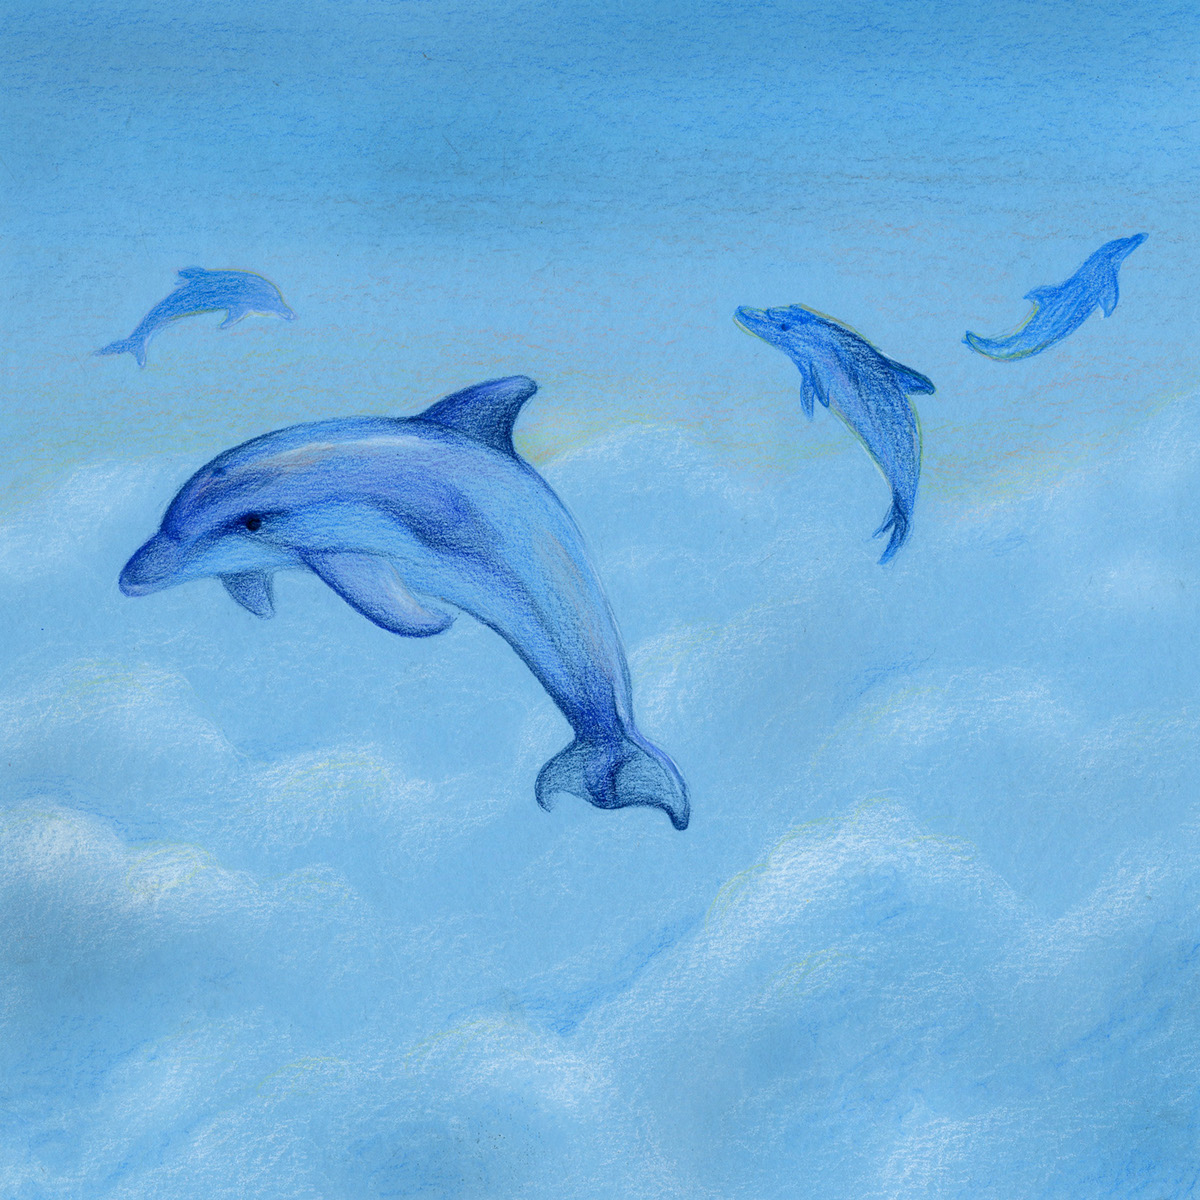 book aquatic animals colored pencil prismacolor canson paper realistc surreal SKY clouds